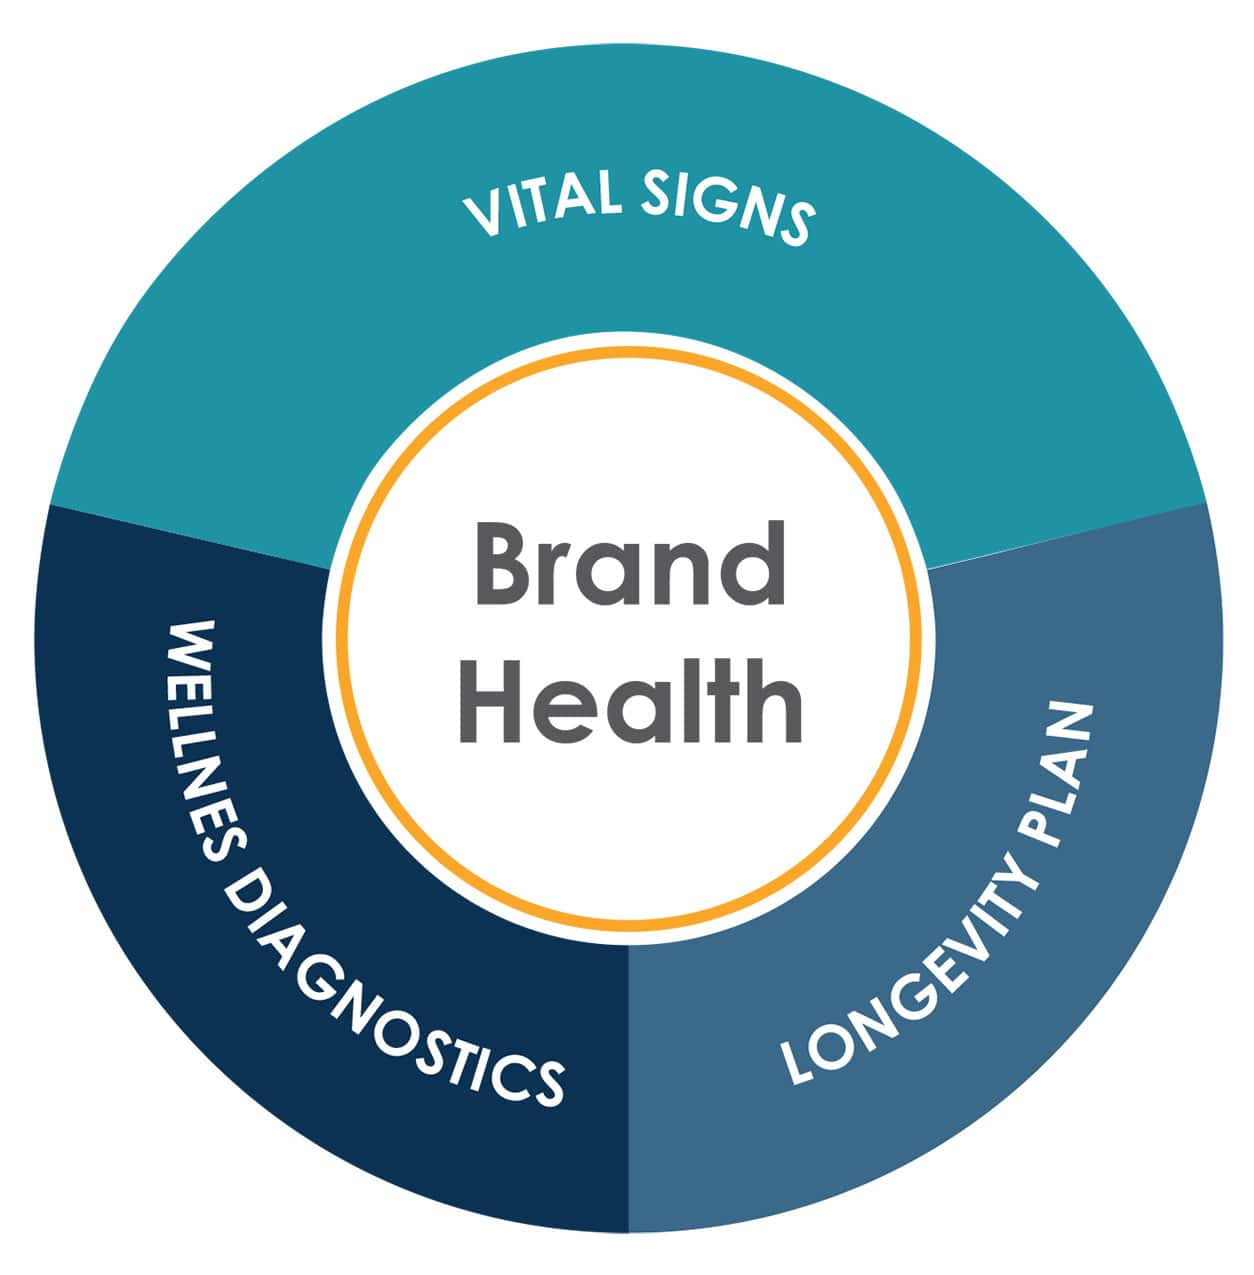 Brand Health Wheel